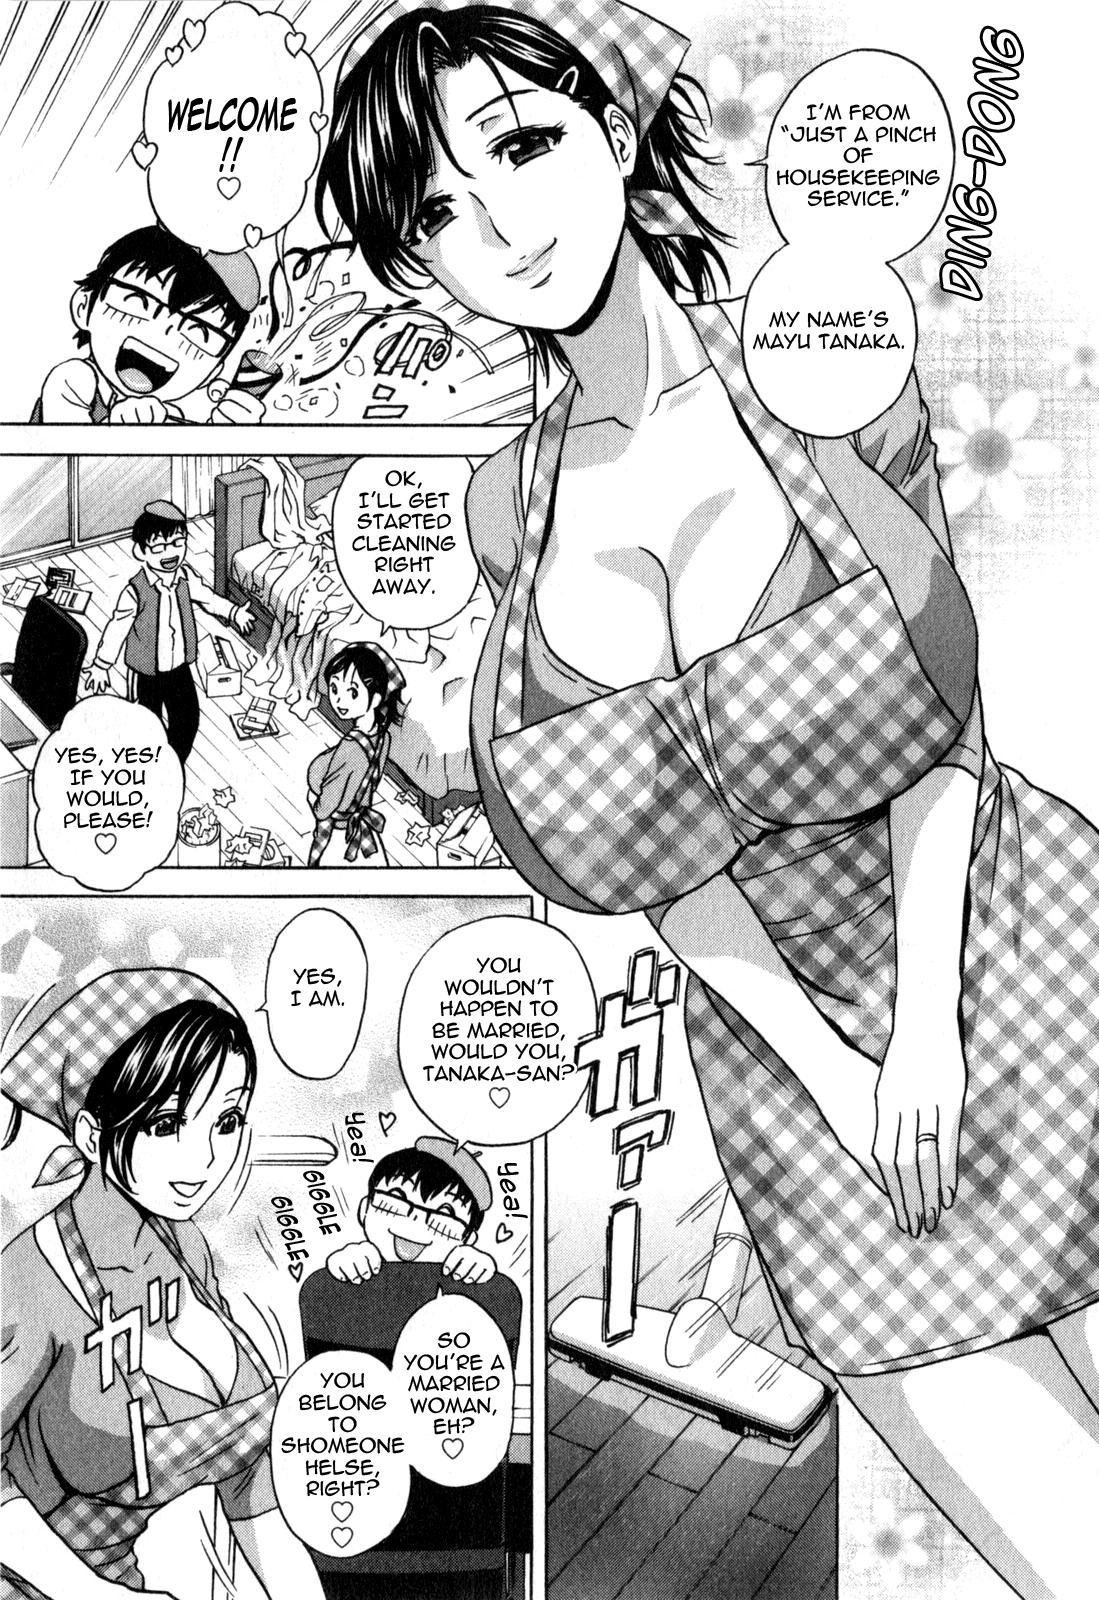 [Hidemaru] Life with Married Women Just Like a Manga 3 - Ch. 1-5 [English] {Tadanohito} 73